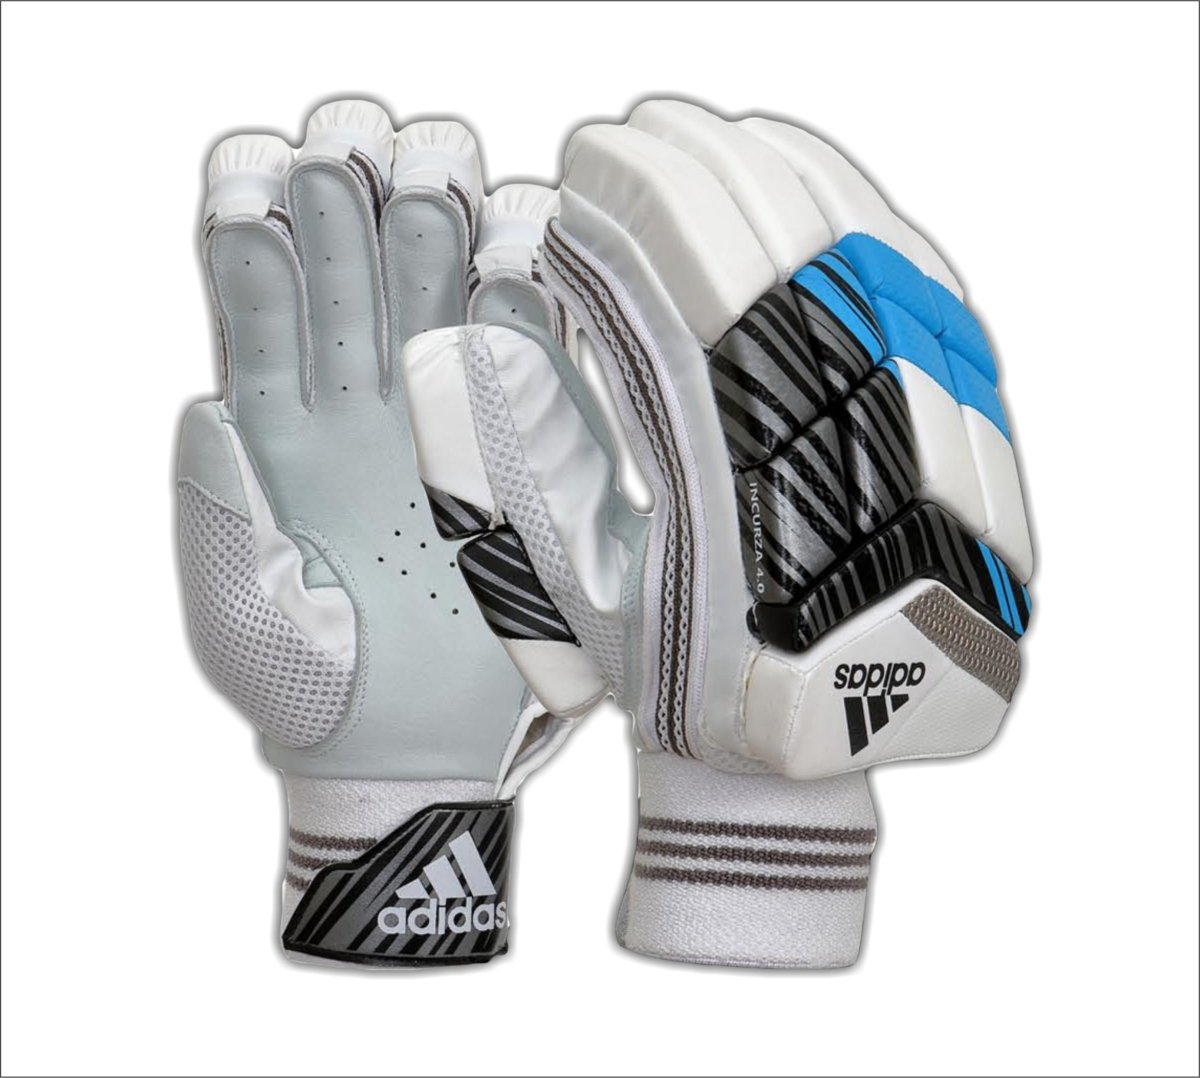 Adidas Incurza 4.0 Junior Cricket Batting Gloves.